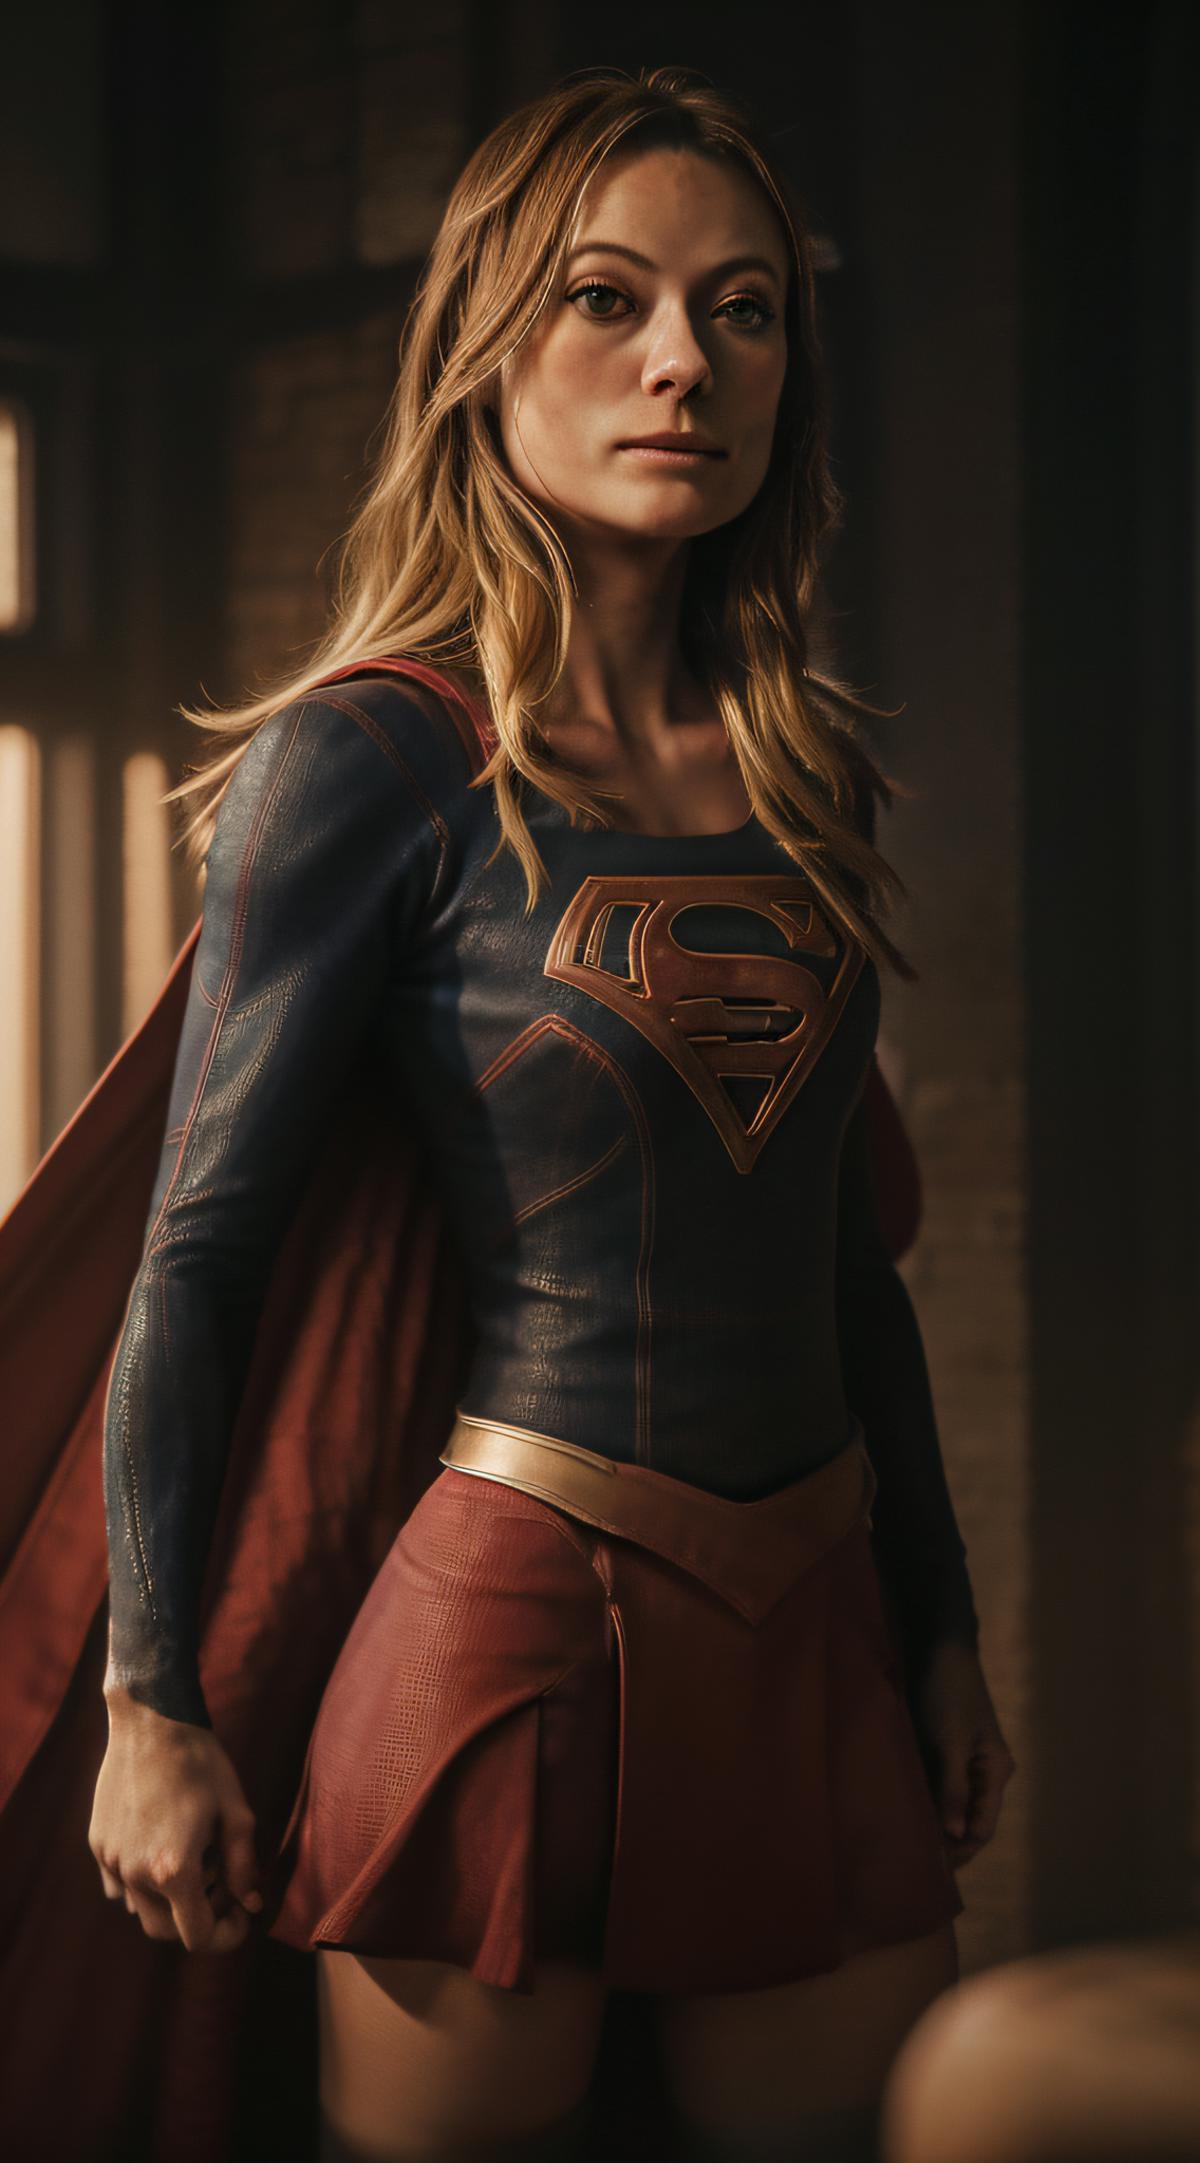 Supergirl suit image by markplunder